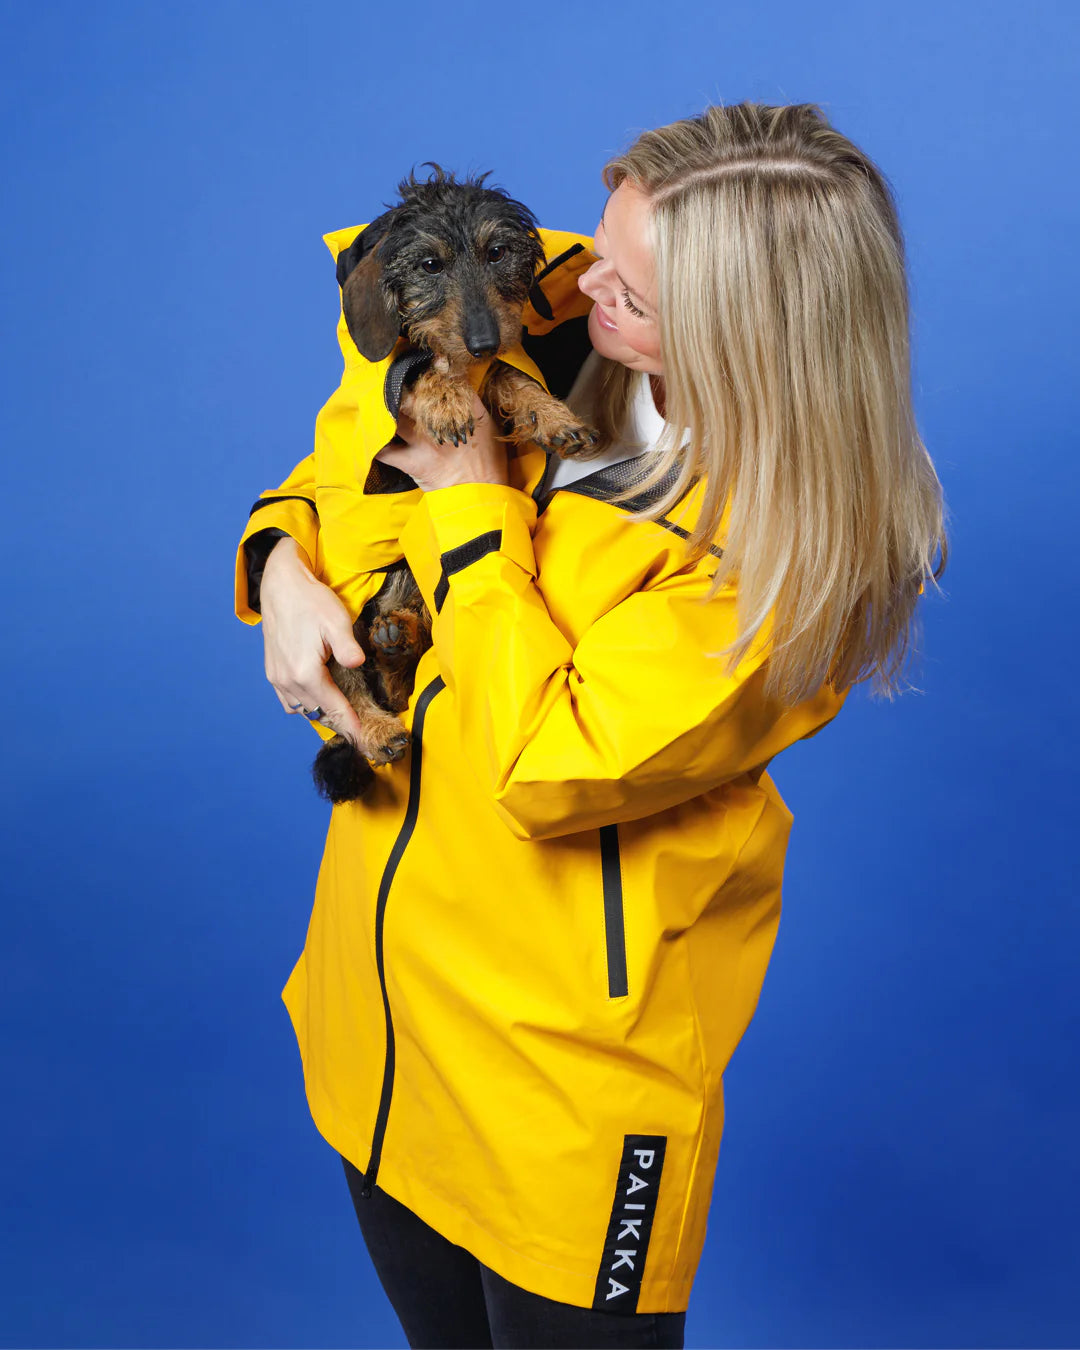 Human Visibility Raincoat Yellow for Women